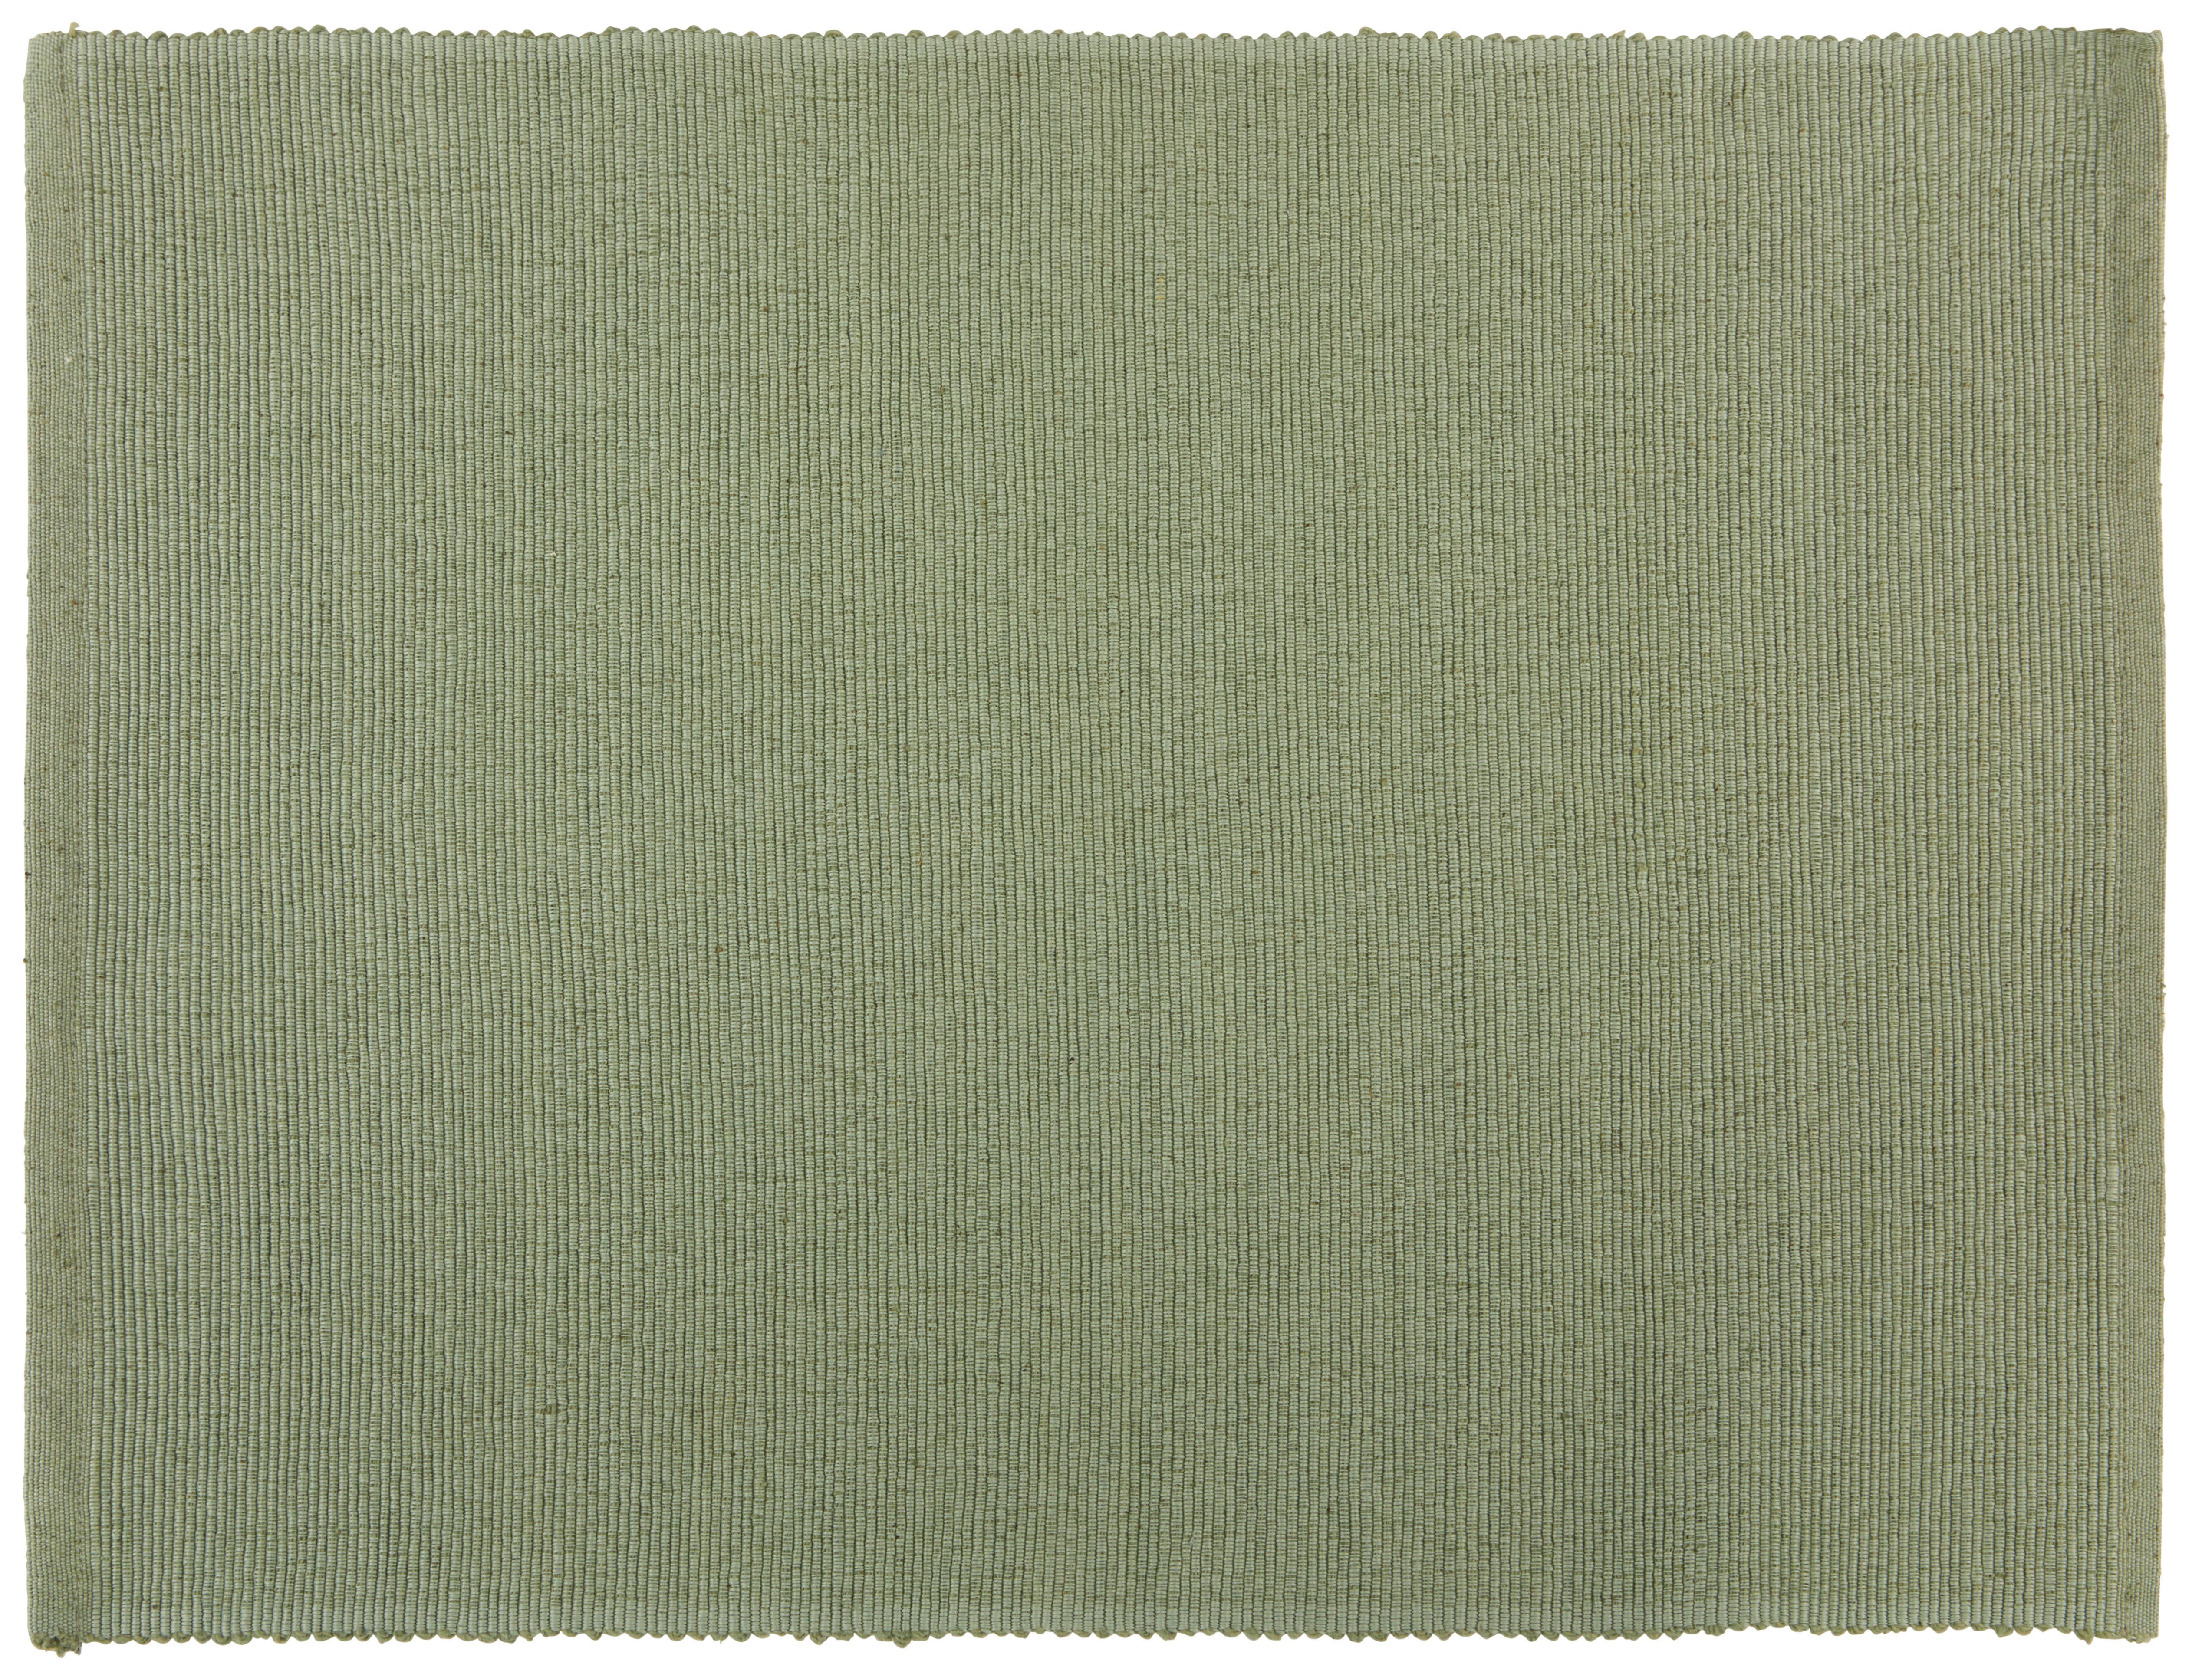 Prestieranie Maren, 33/45cm - šalviovozelená, textil (33/45cm) - Based